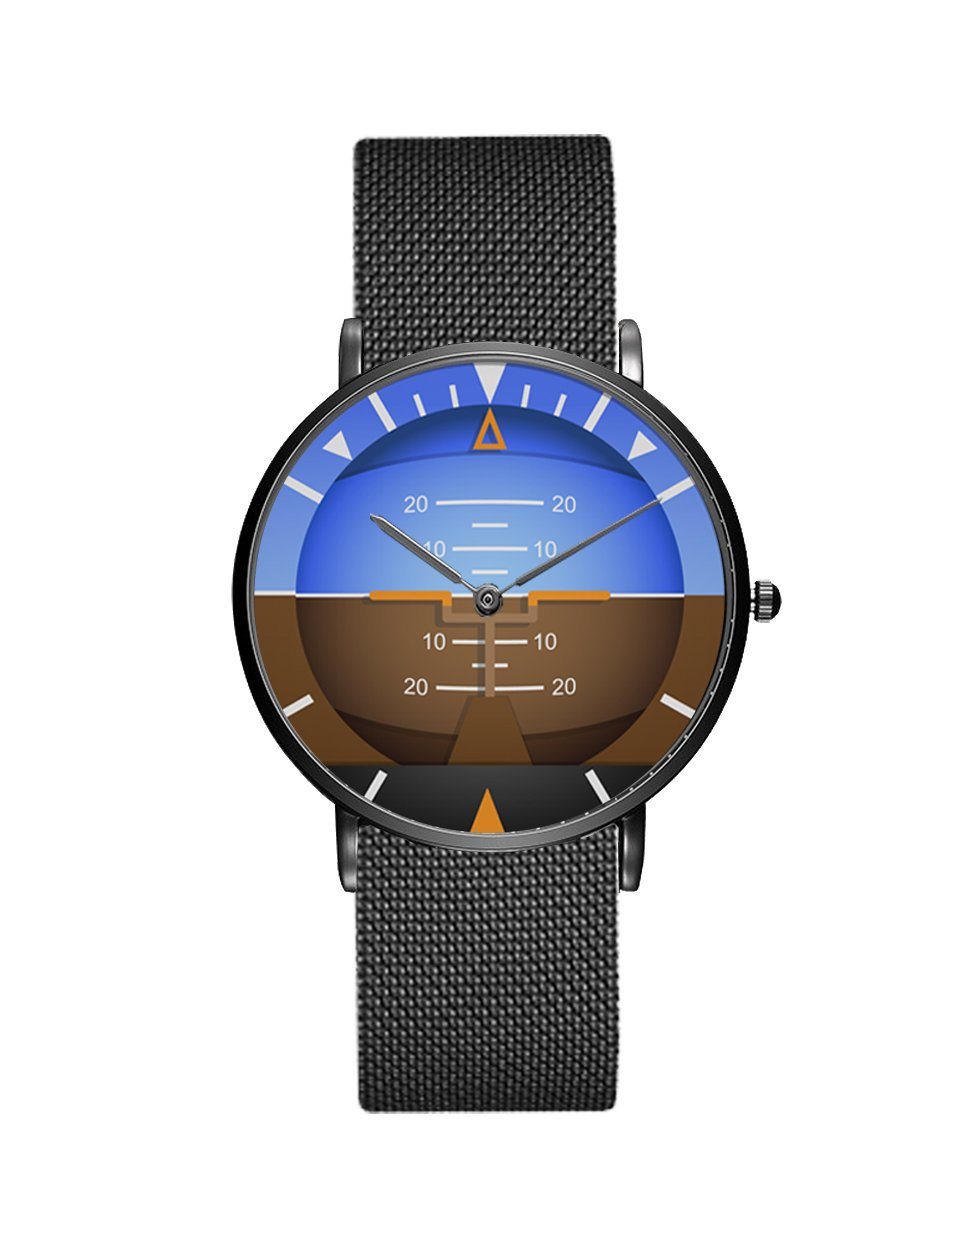 Airplane Instrument Series (Gyro Horizon 2) Stainless Steel Strap Watches Pilot Eyes Store Black & Stainless Steel Strap 